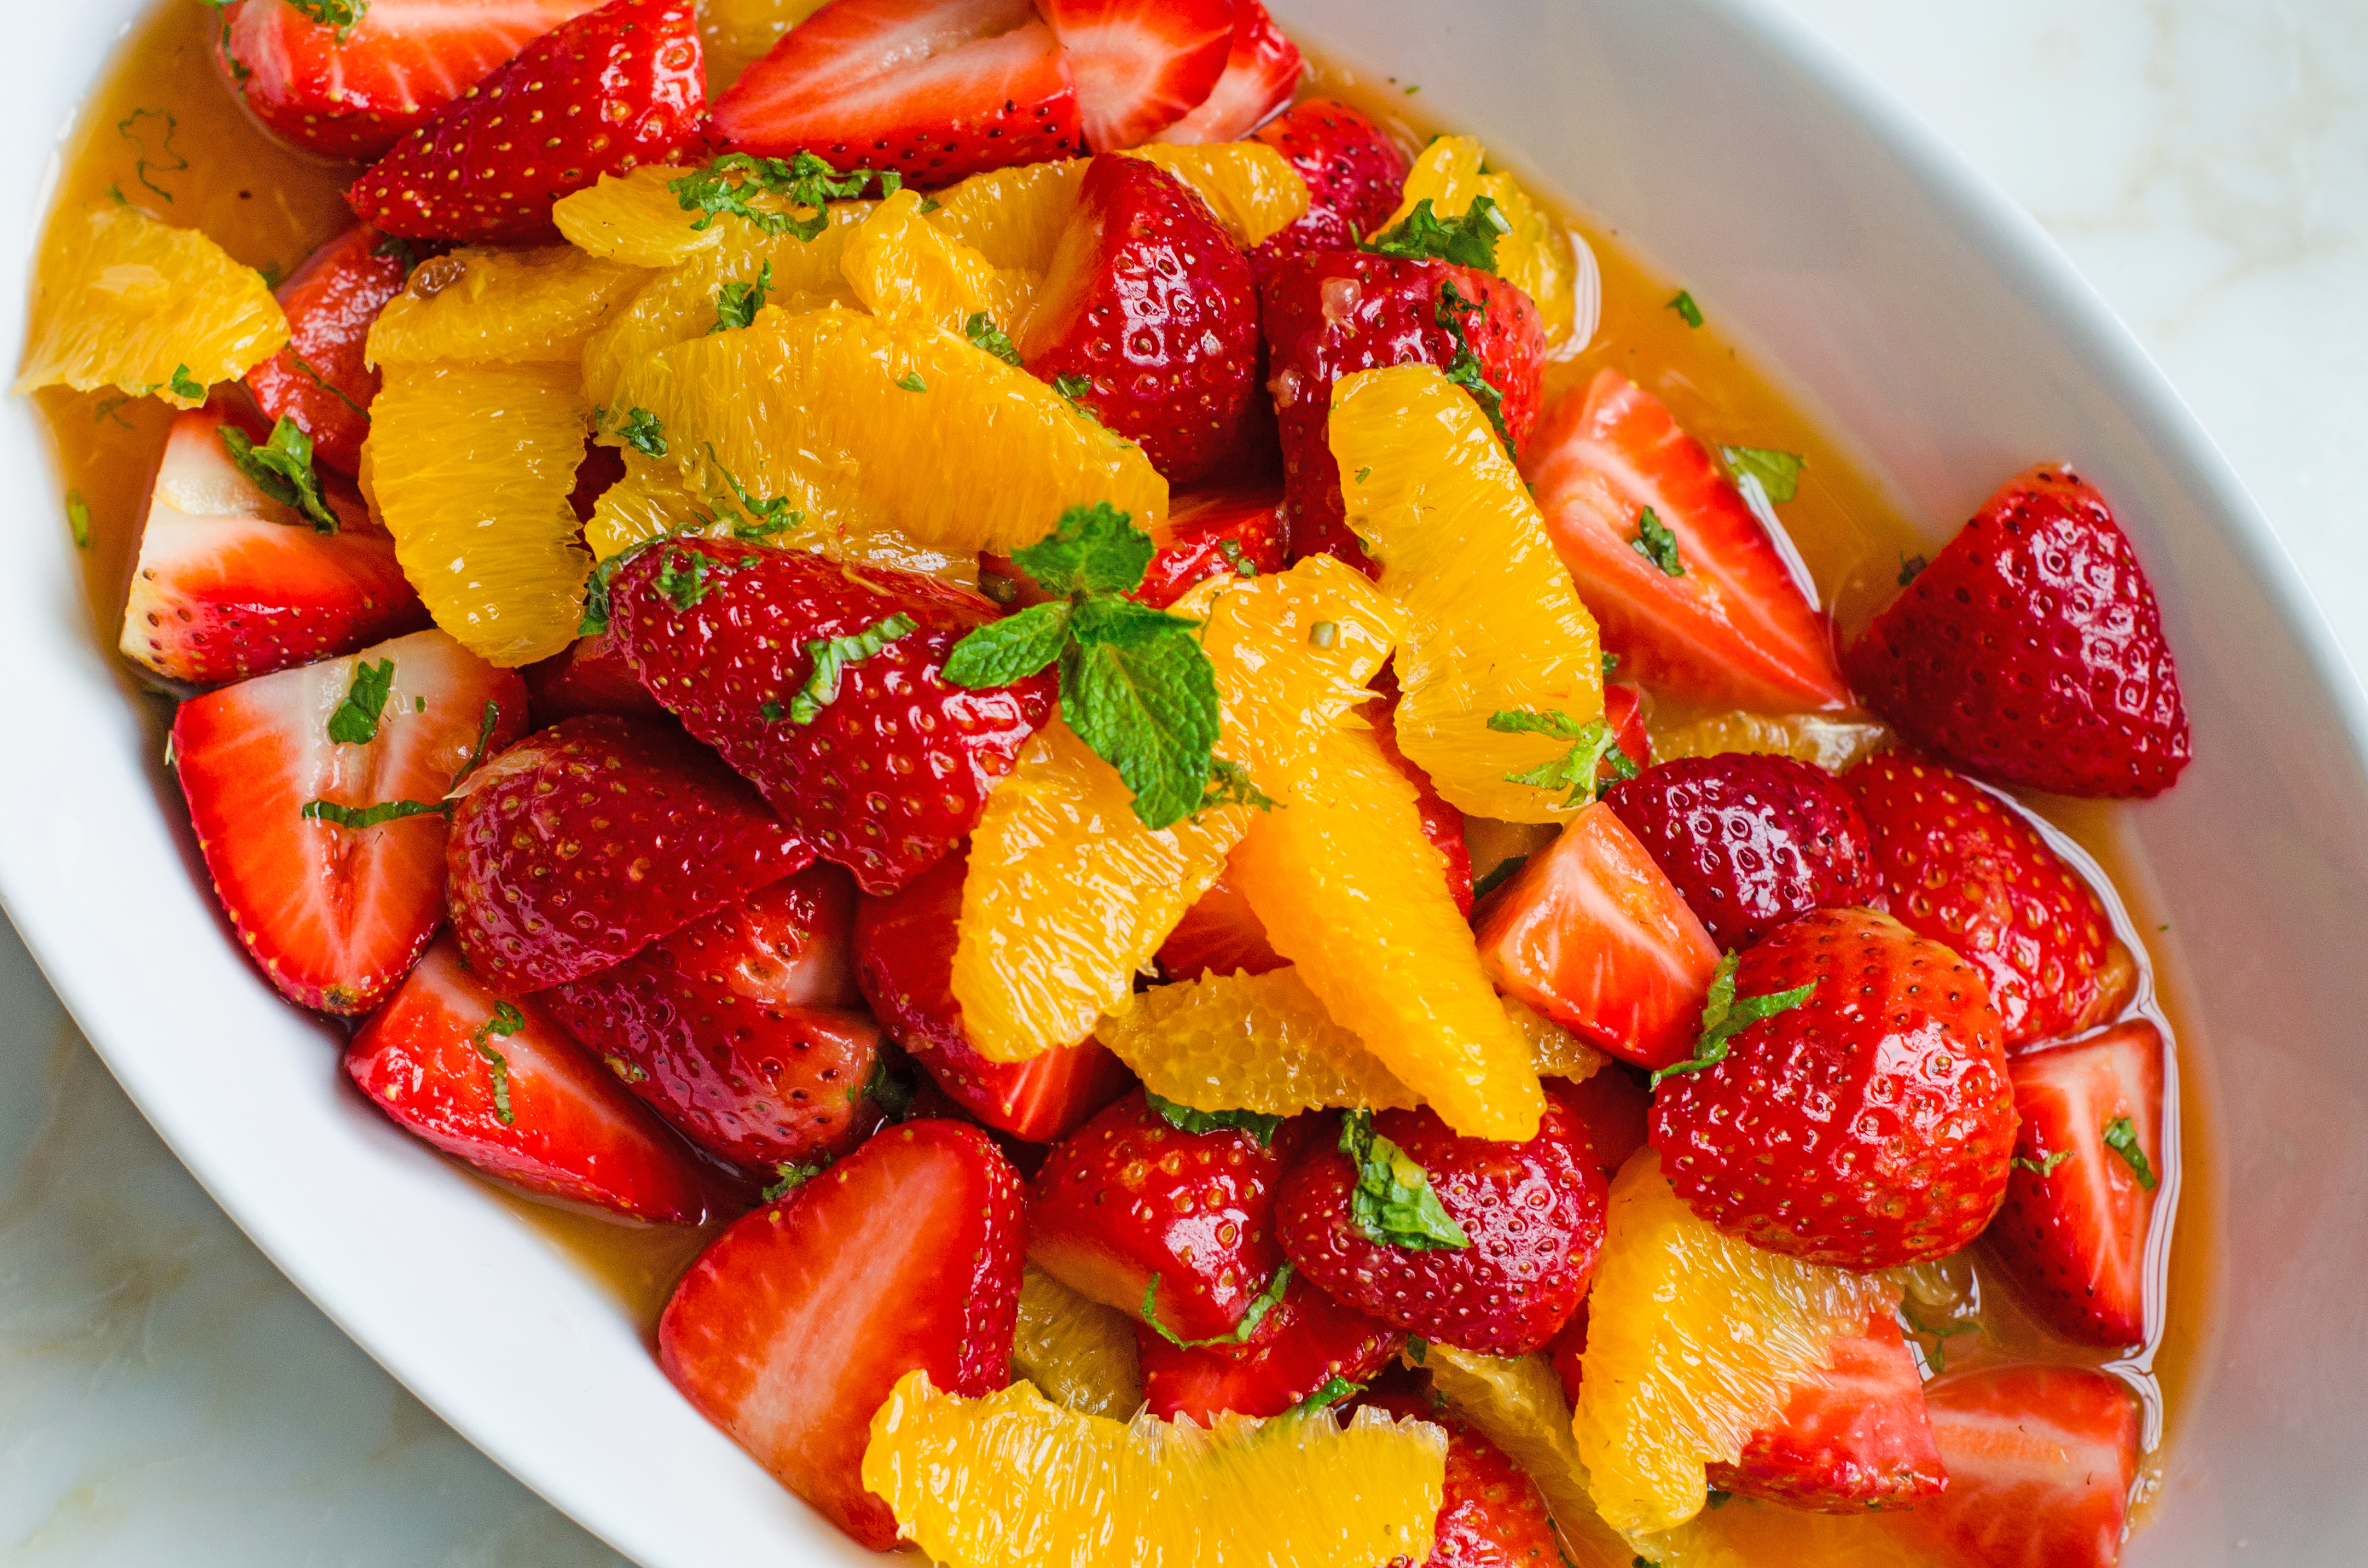 https://www.onceuponachef.com/images/2014/04/Strawberry-Orange-Salad-with-Syrup.jpg